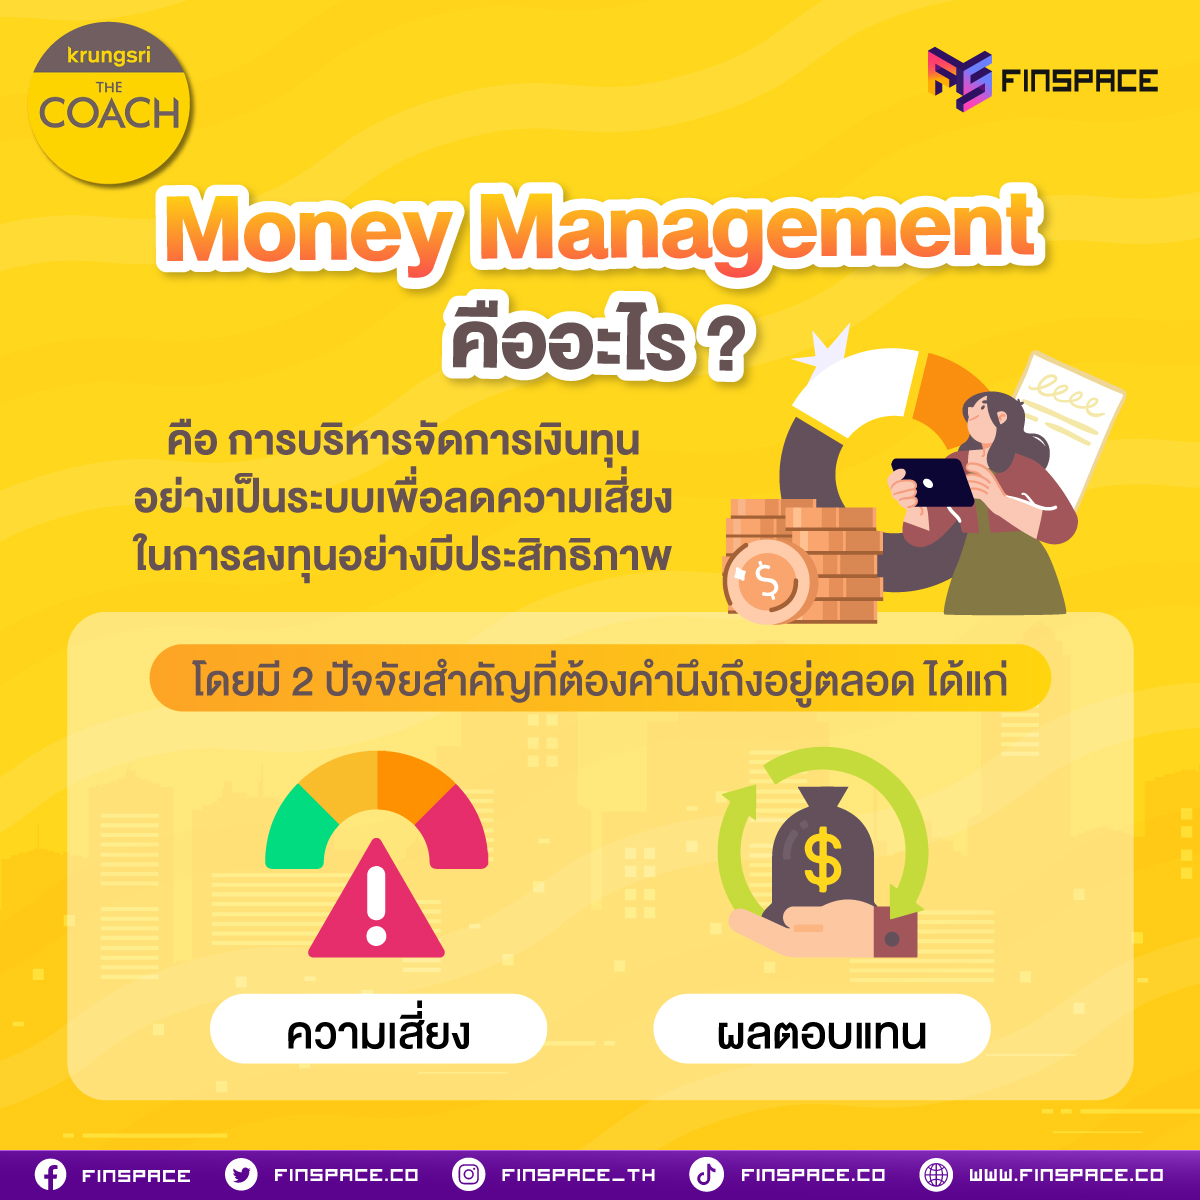 Money Management 